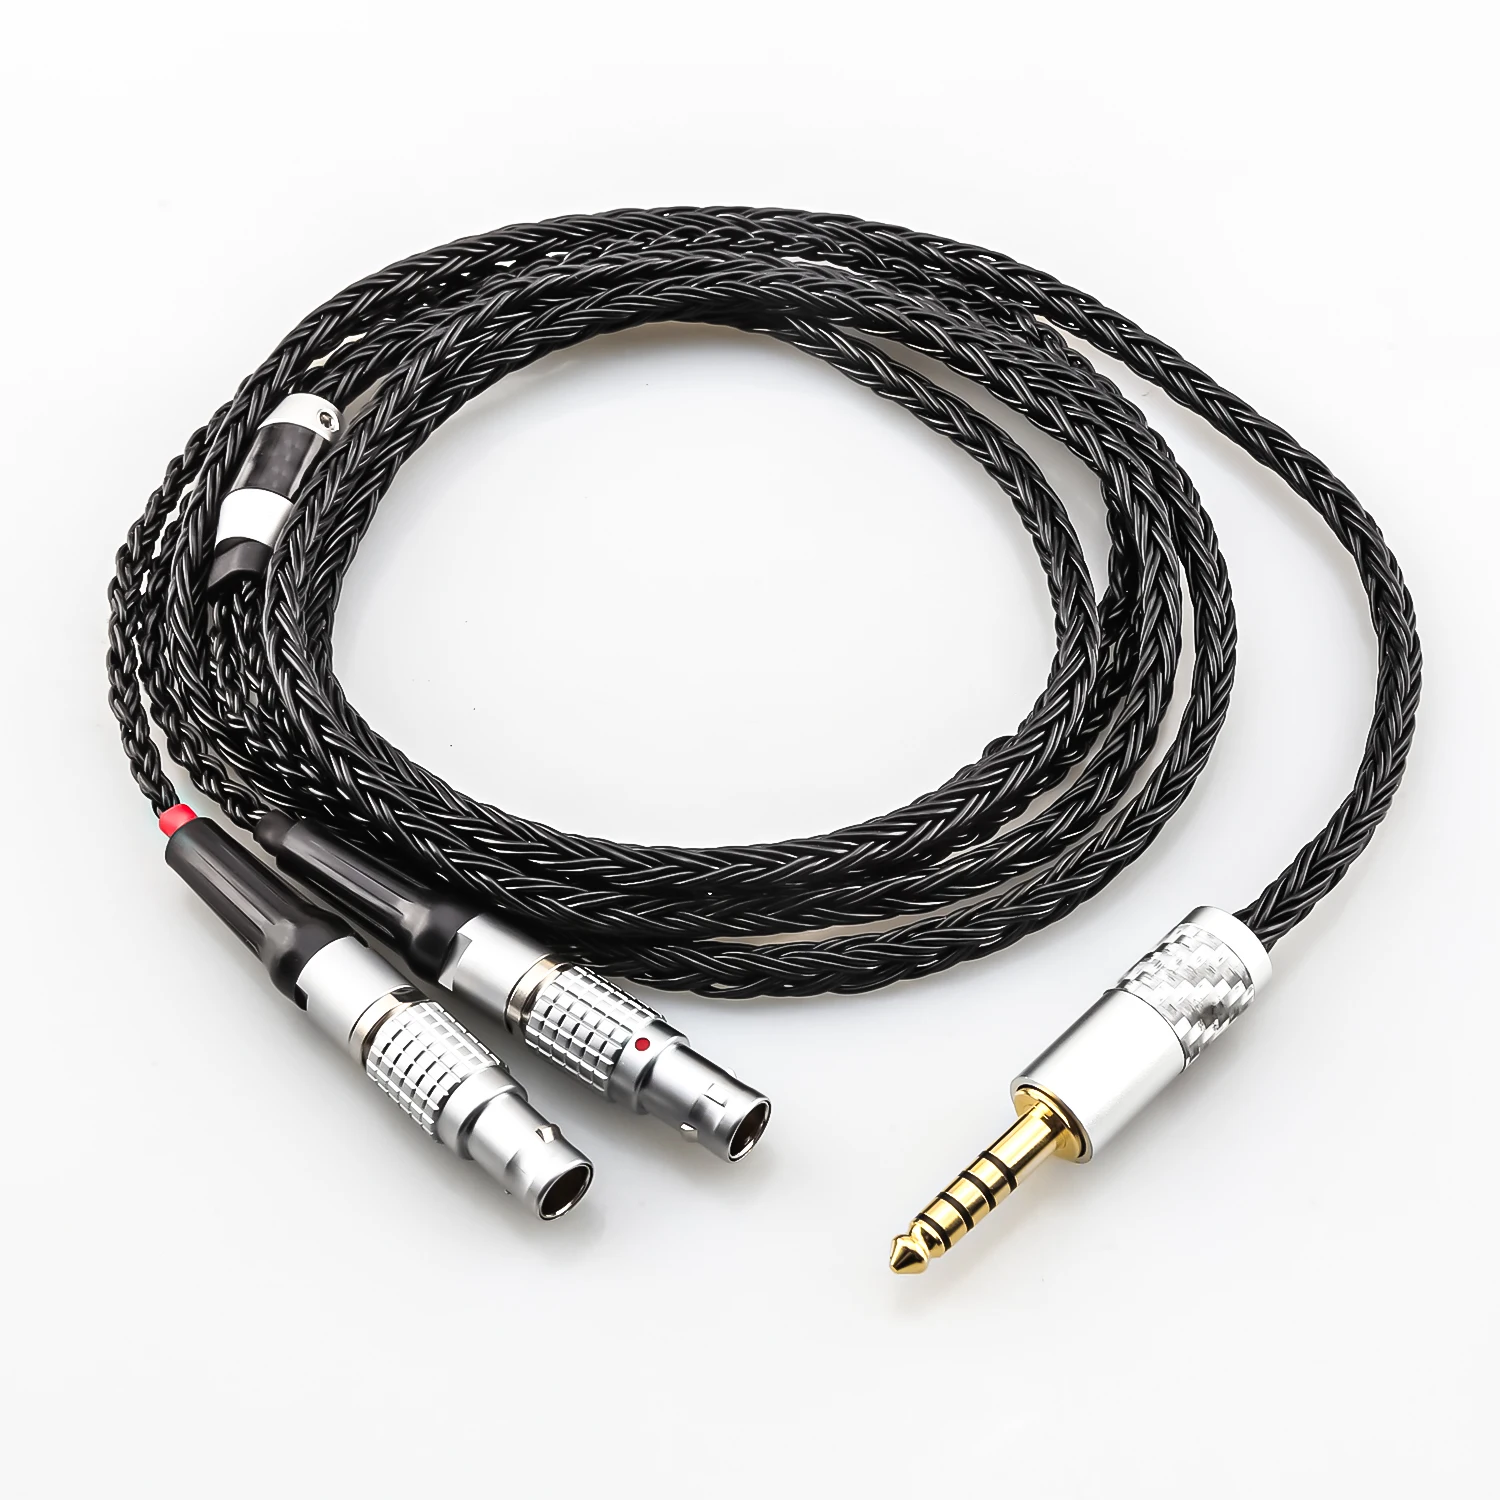 

HiFi 2.5mm/3.5mm/4.4mm XLR male Black 16 cores Headphone Upgrade Cable For Focal Utopia Fidelity Circumaural Earphone